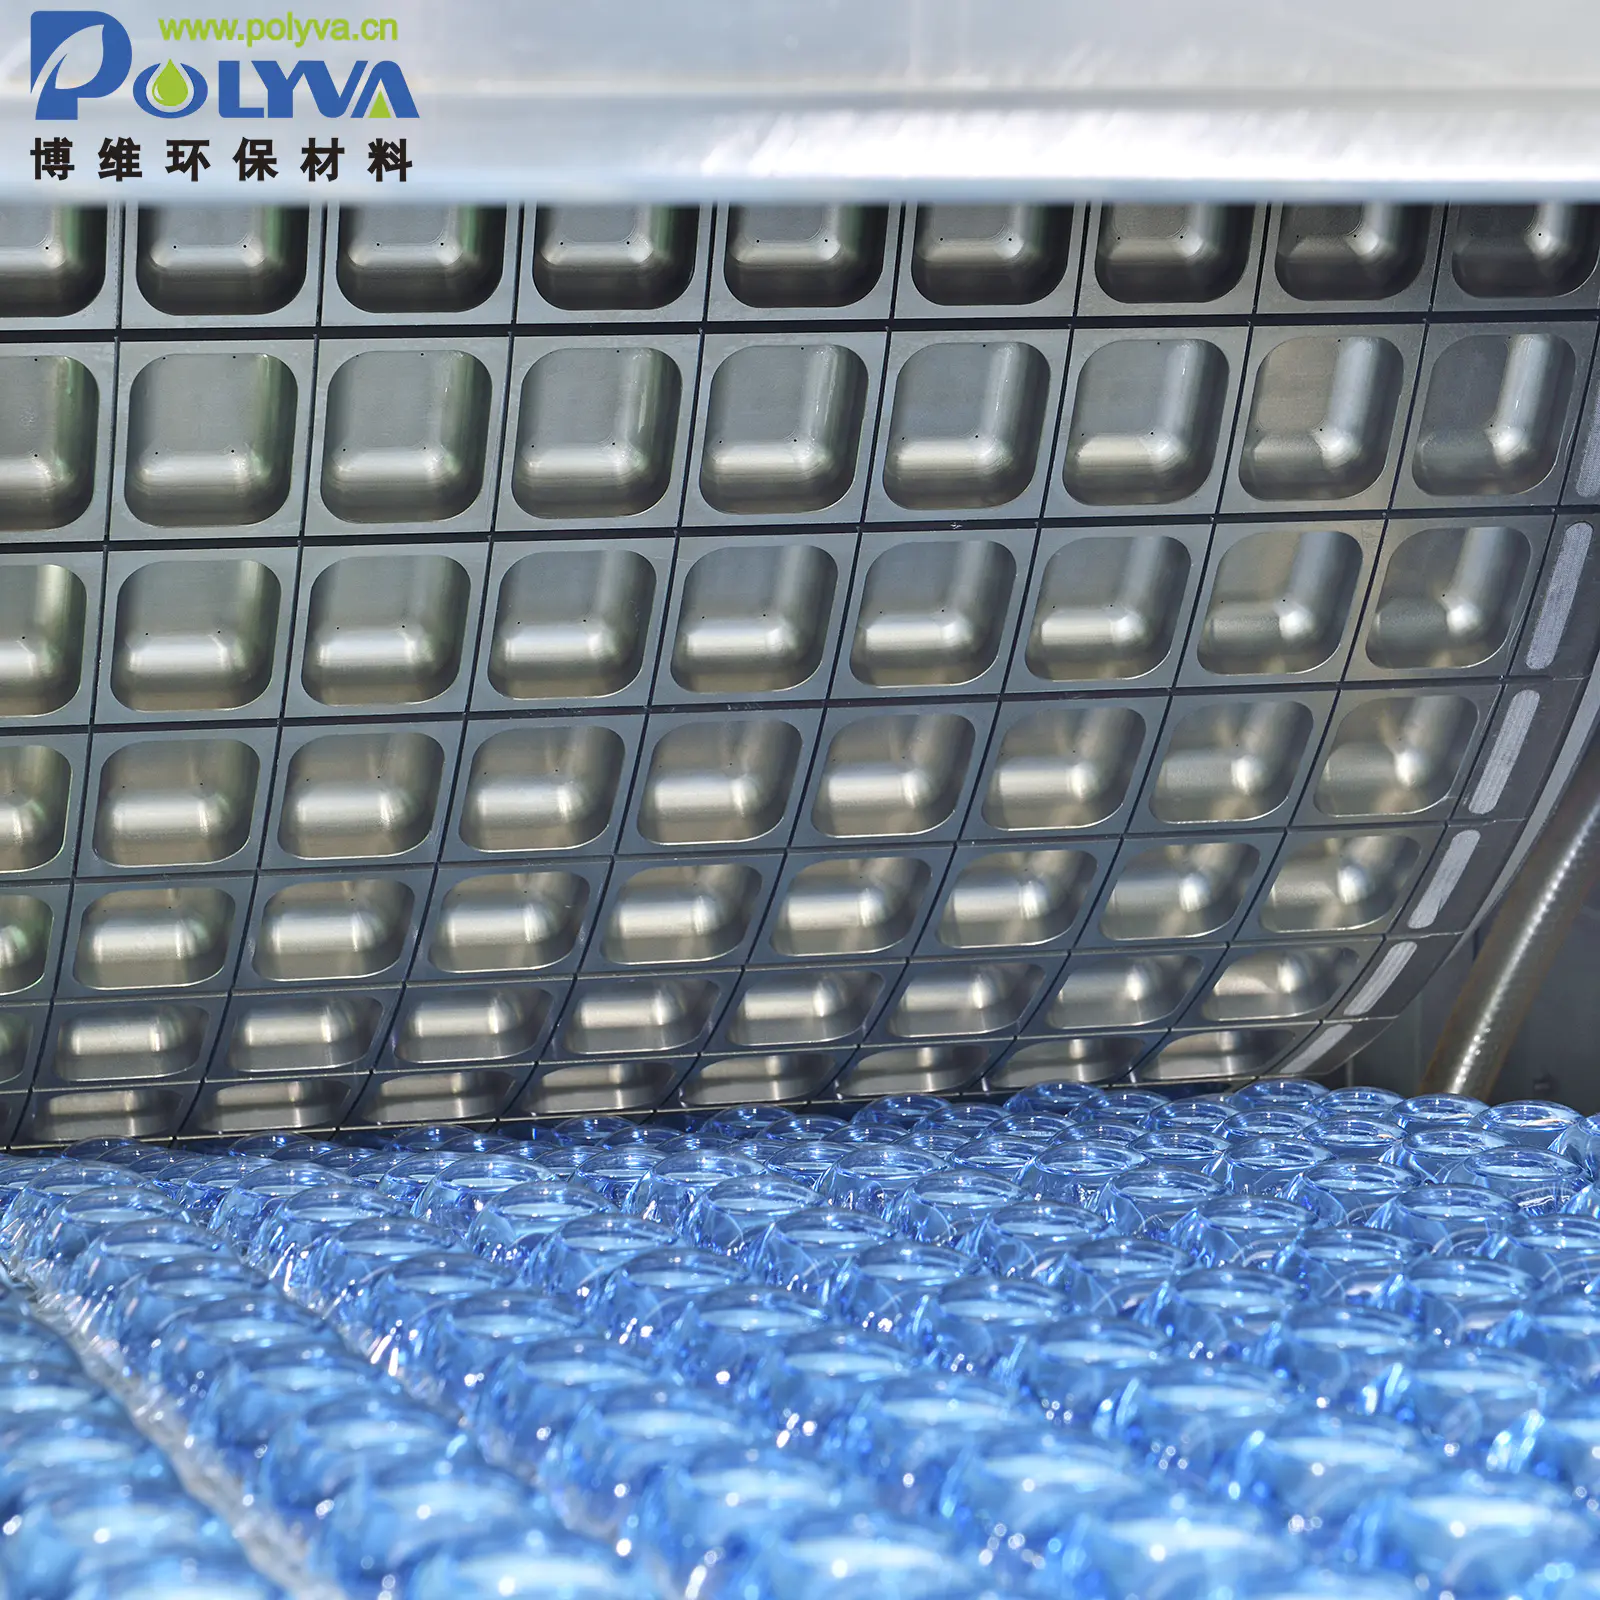 High capacity PVAlaundry water soluble laundry capsules making machine detergent pods packing machine